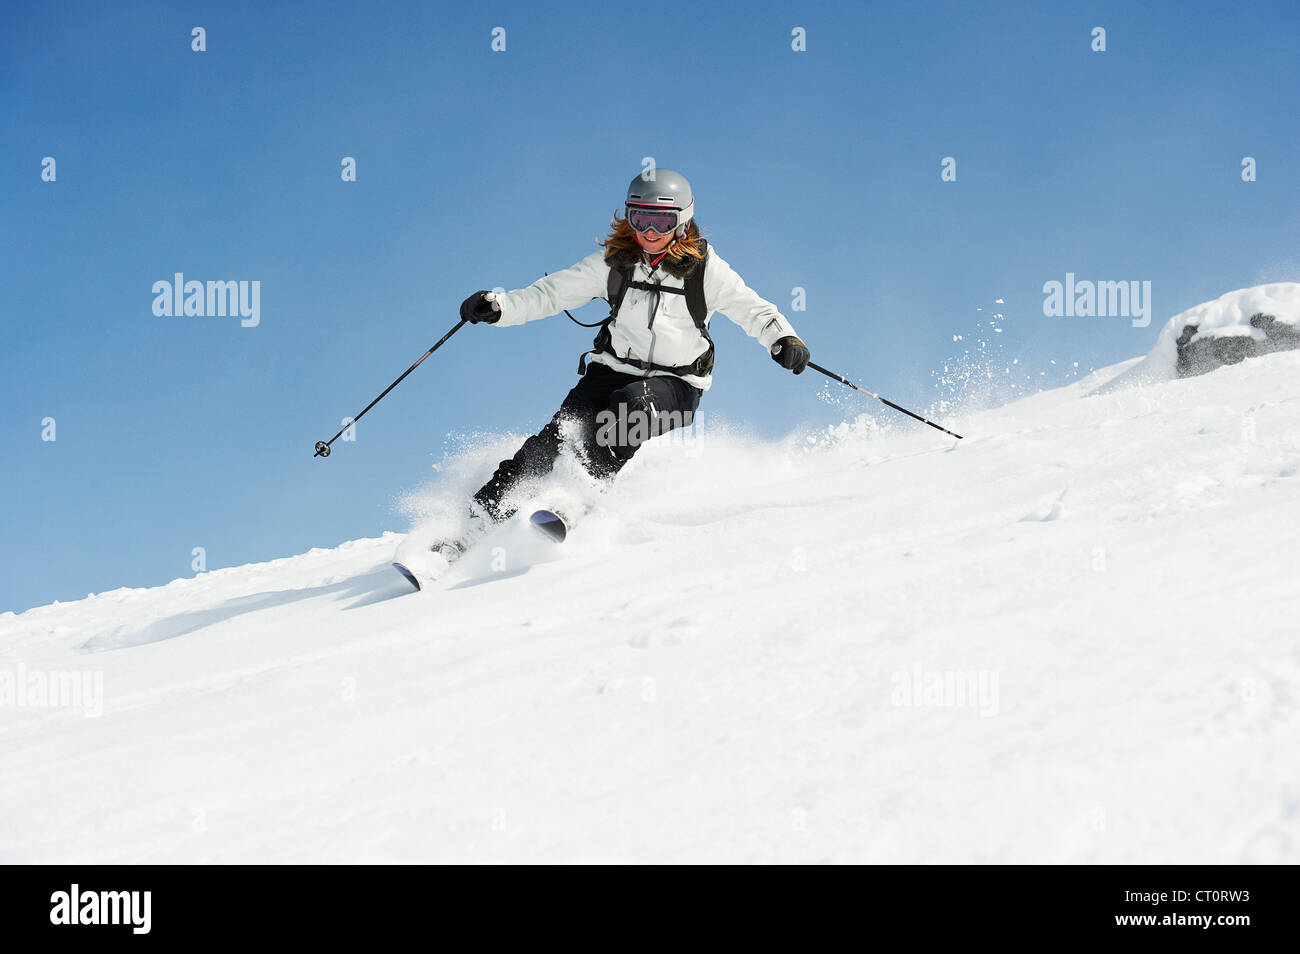 Skier skiing on snowy slope Stock Photo